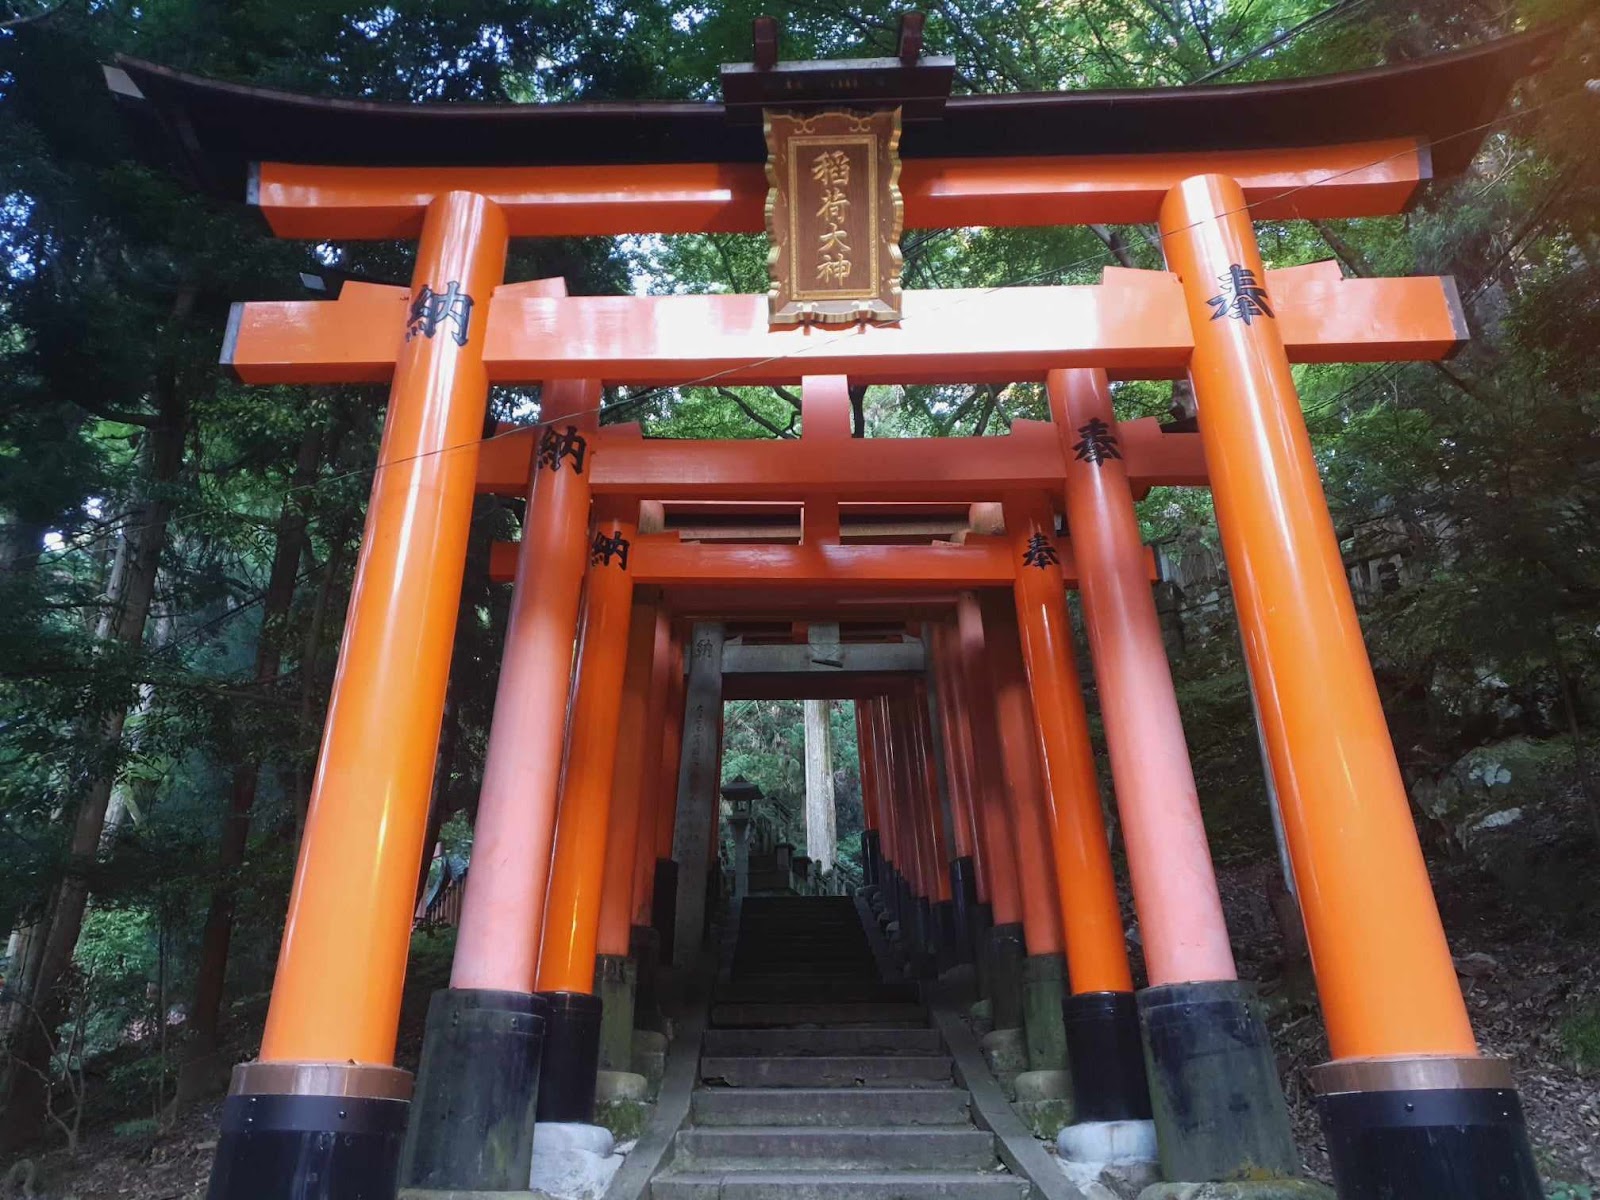 Giant torii gates at Fushimi Inari Taisha